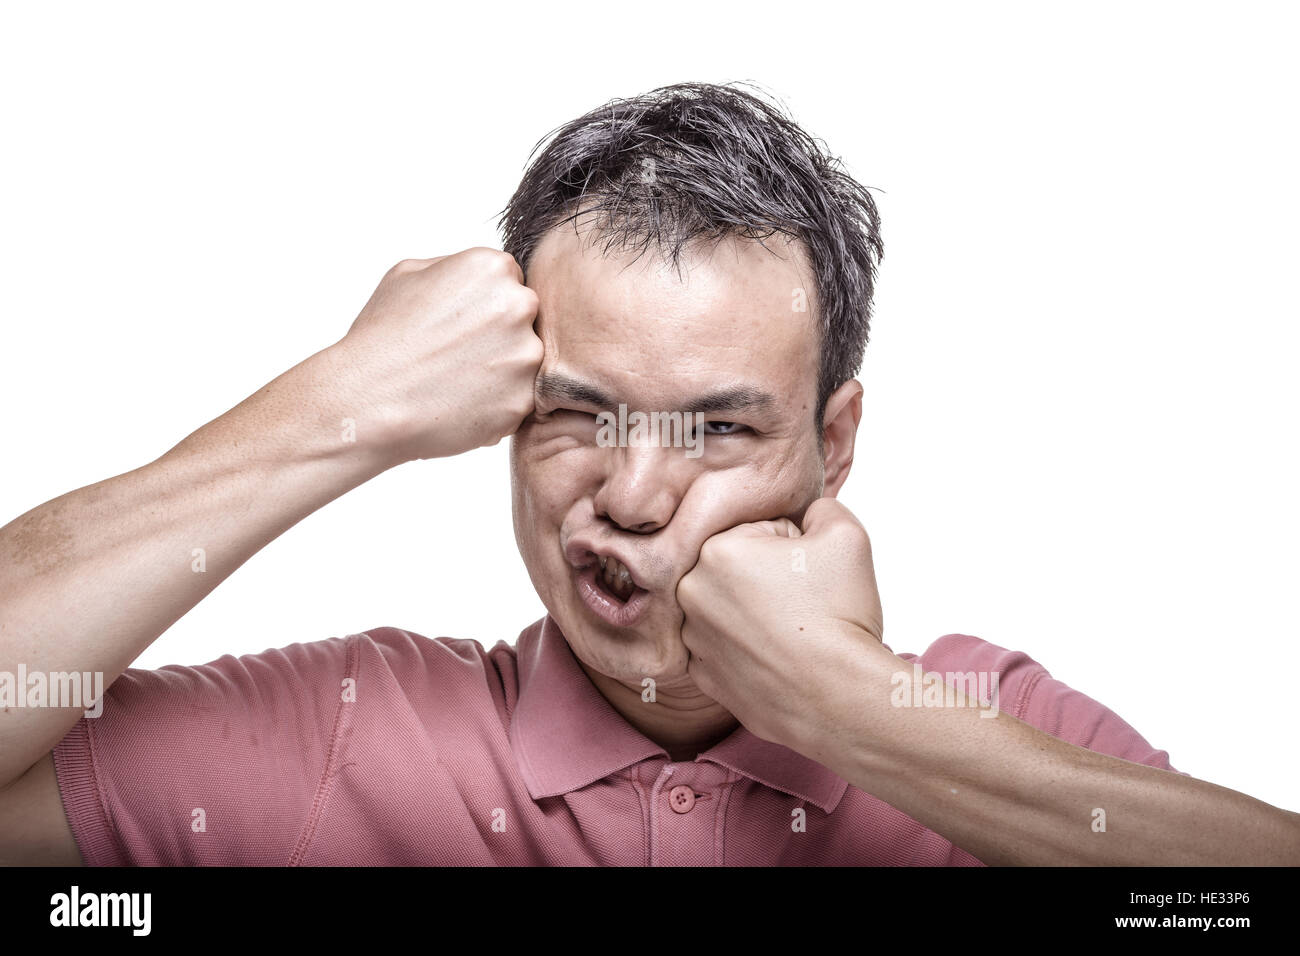 Facial expression : man punching his face Stock Photo